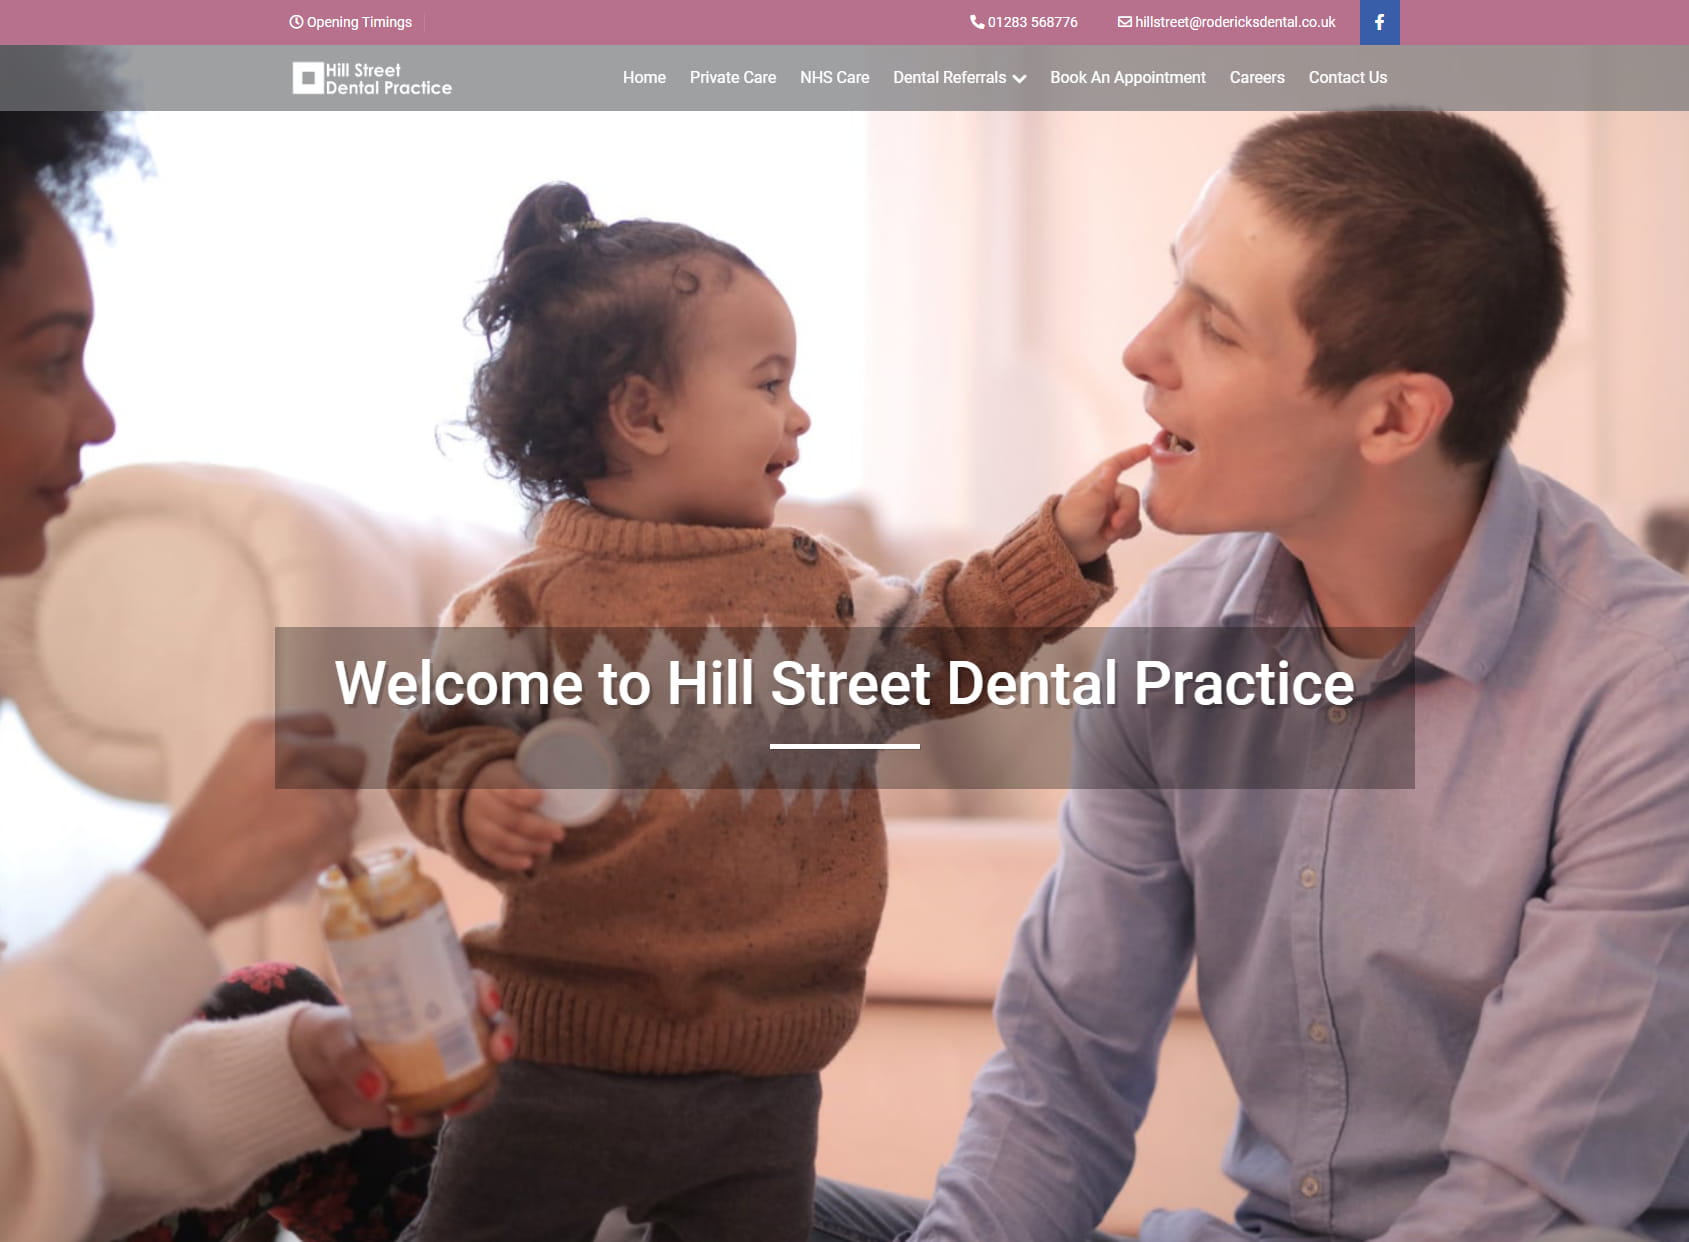 Hill Street Dental Practice